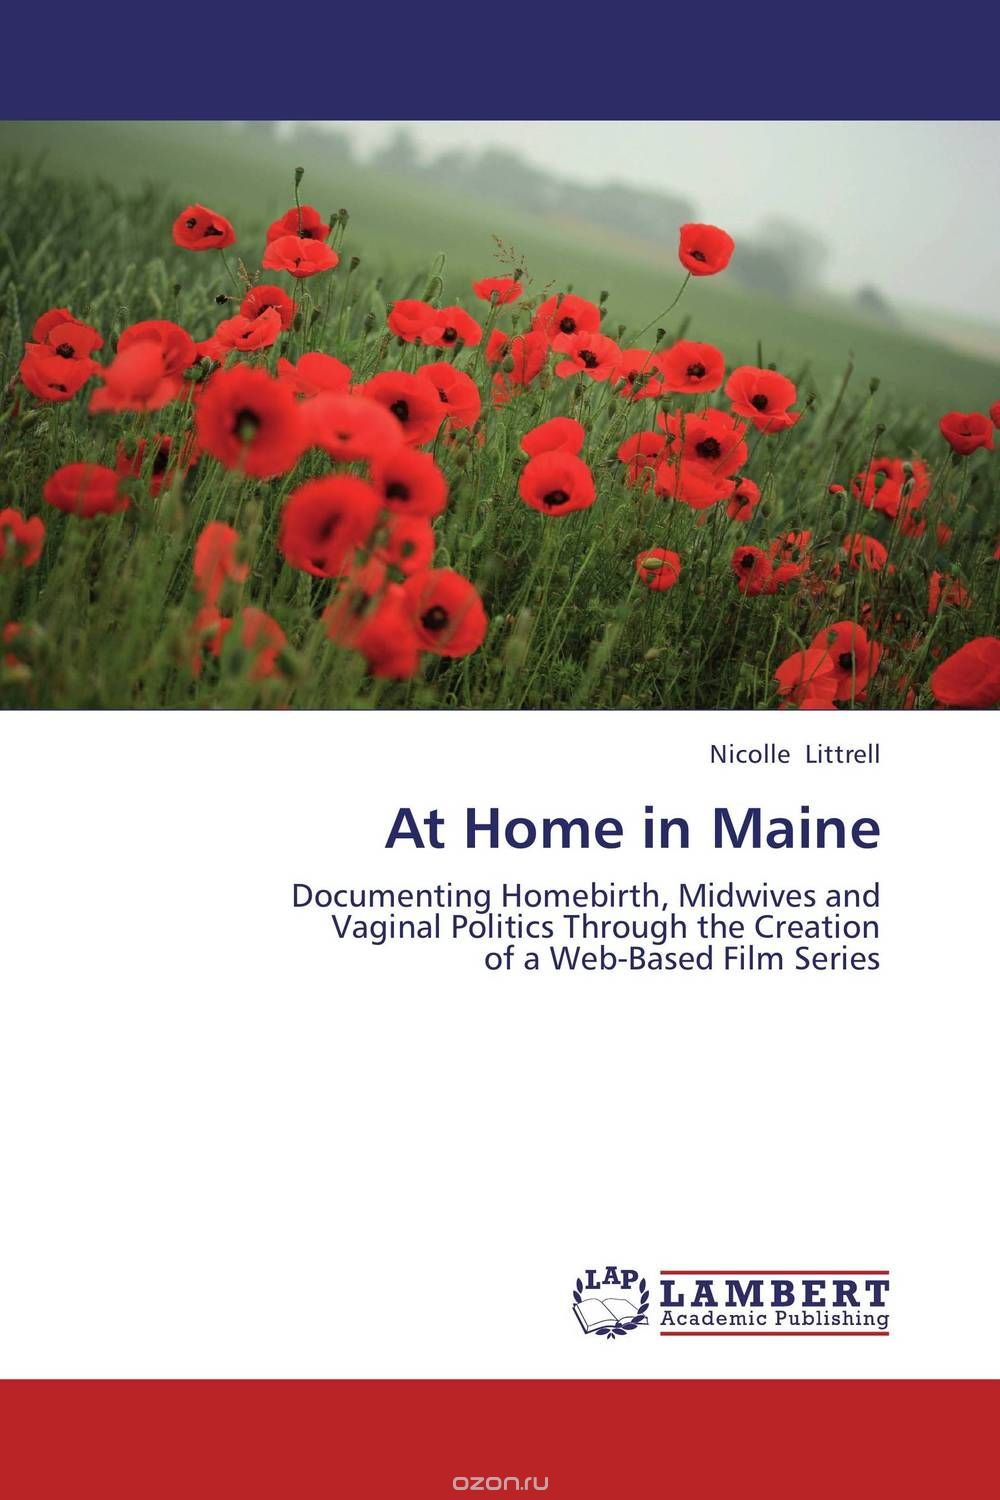 Скачать книгу "At Home in Maine"